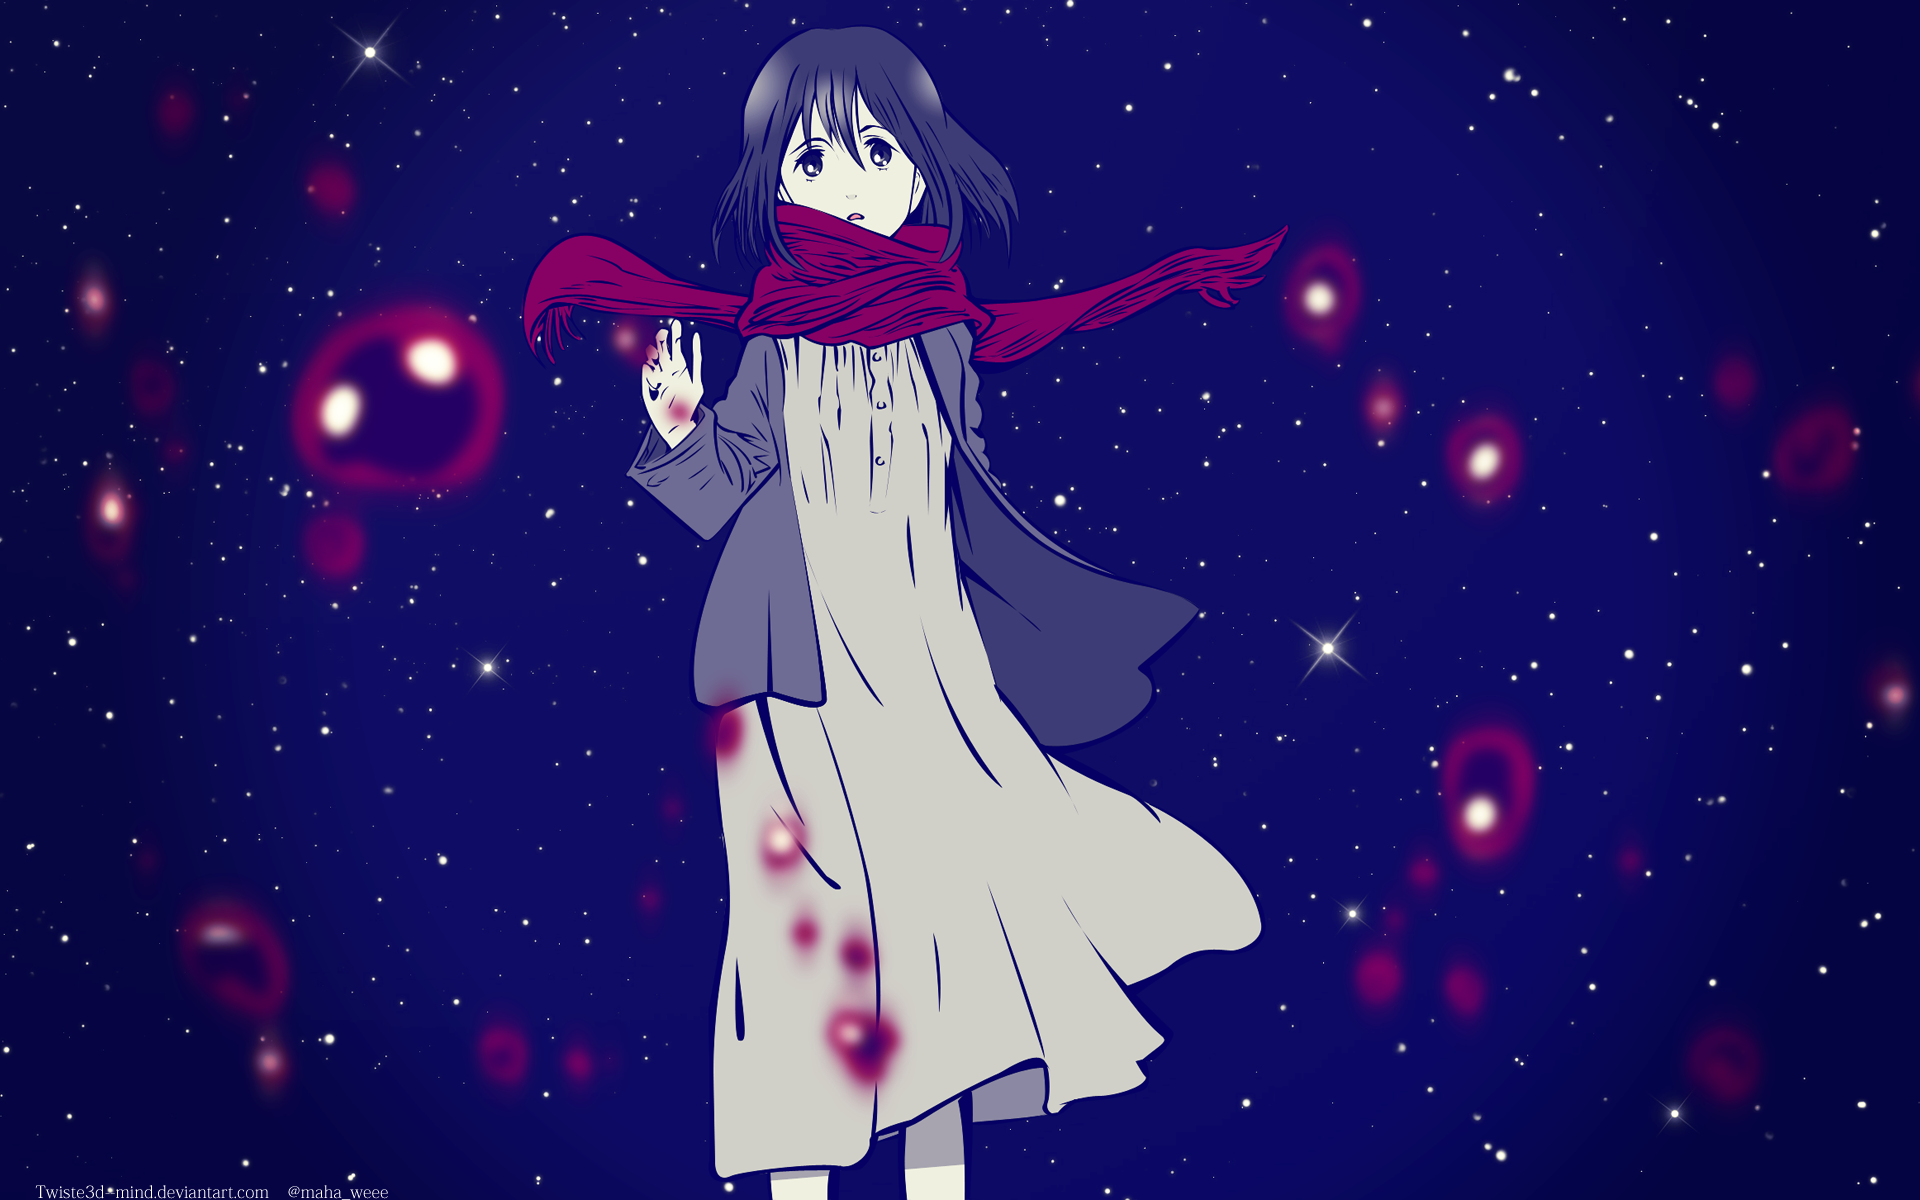 Blood And Starlight Mikasa Wallpaper By Twist3d Mind On